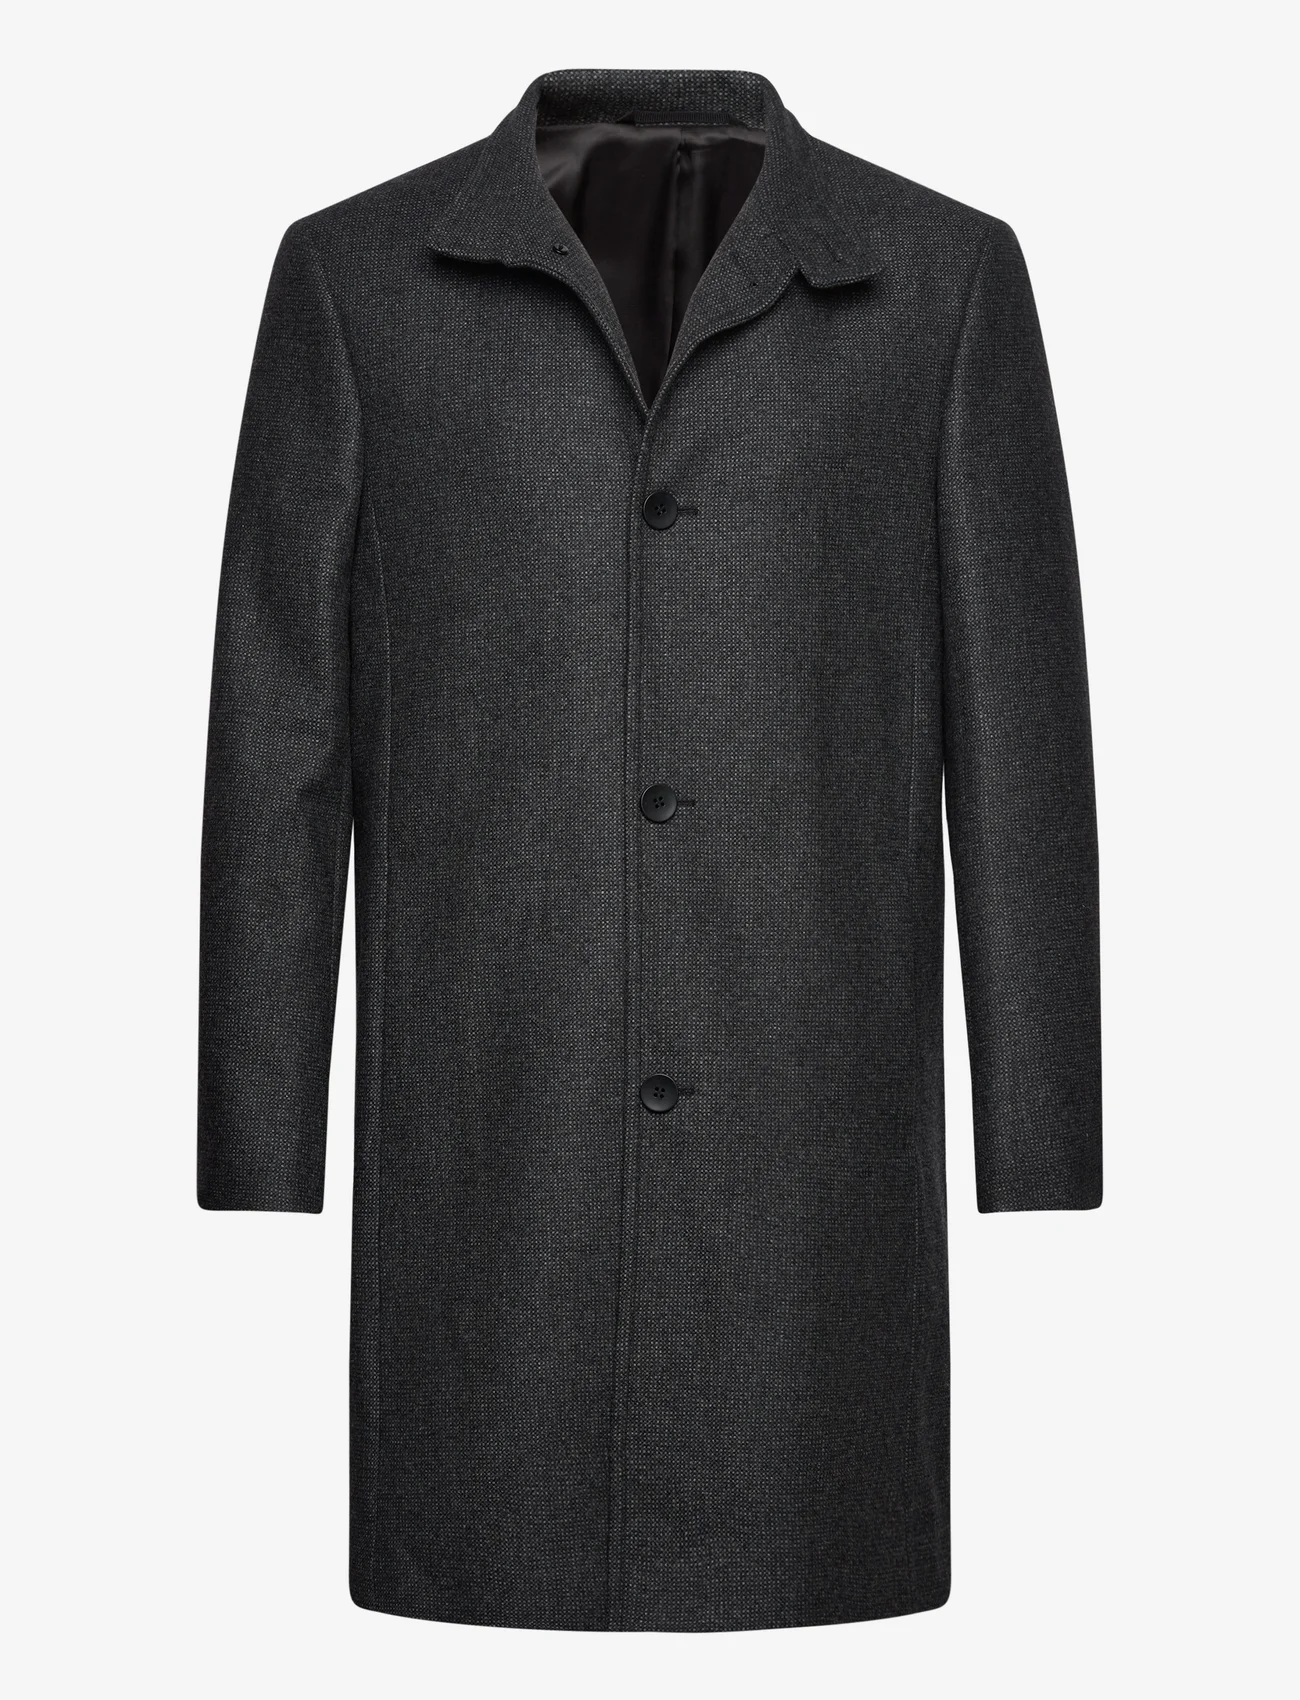 Calvin Klein - WOOL BLEND FUNNEL NECK COAT - winter jackets - mid grey heather - 0